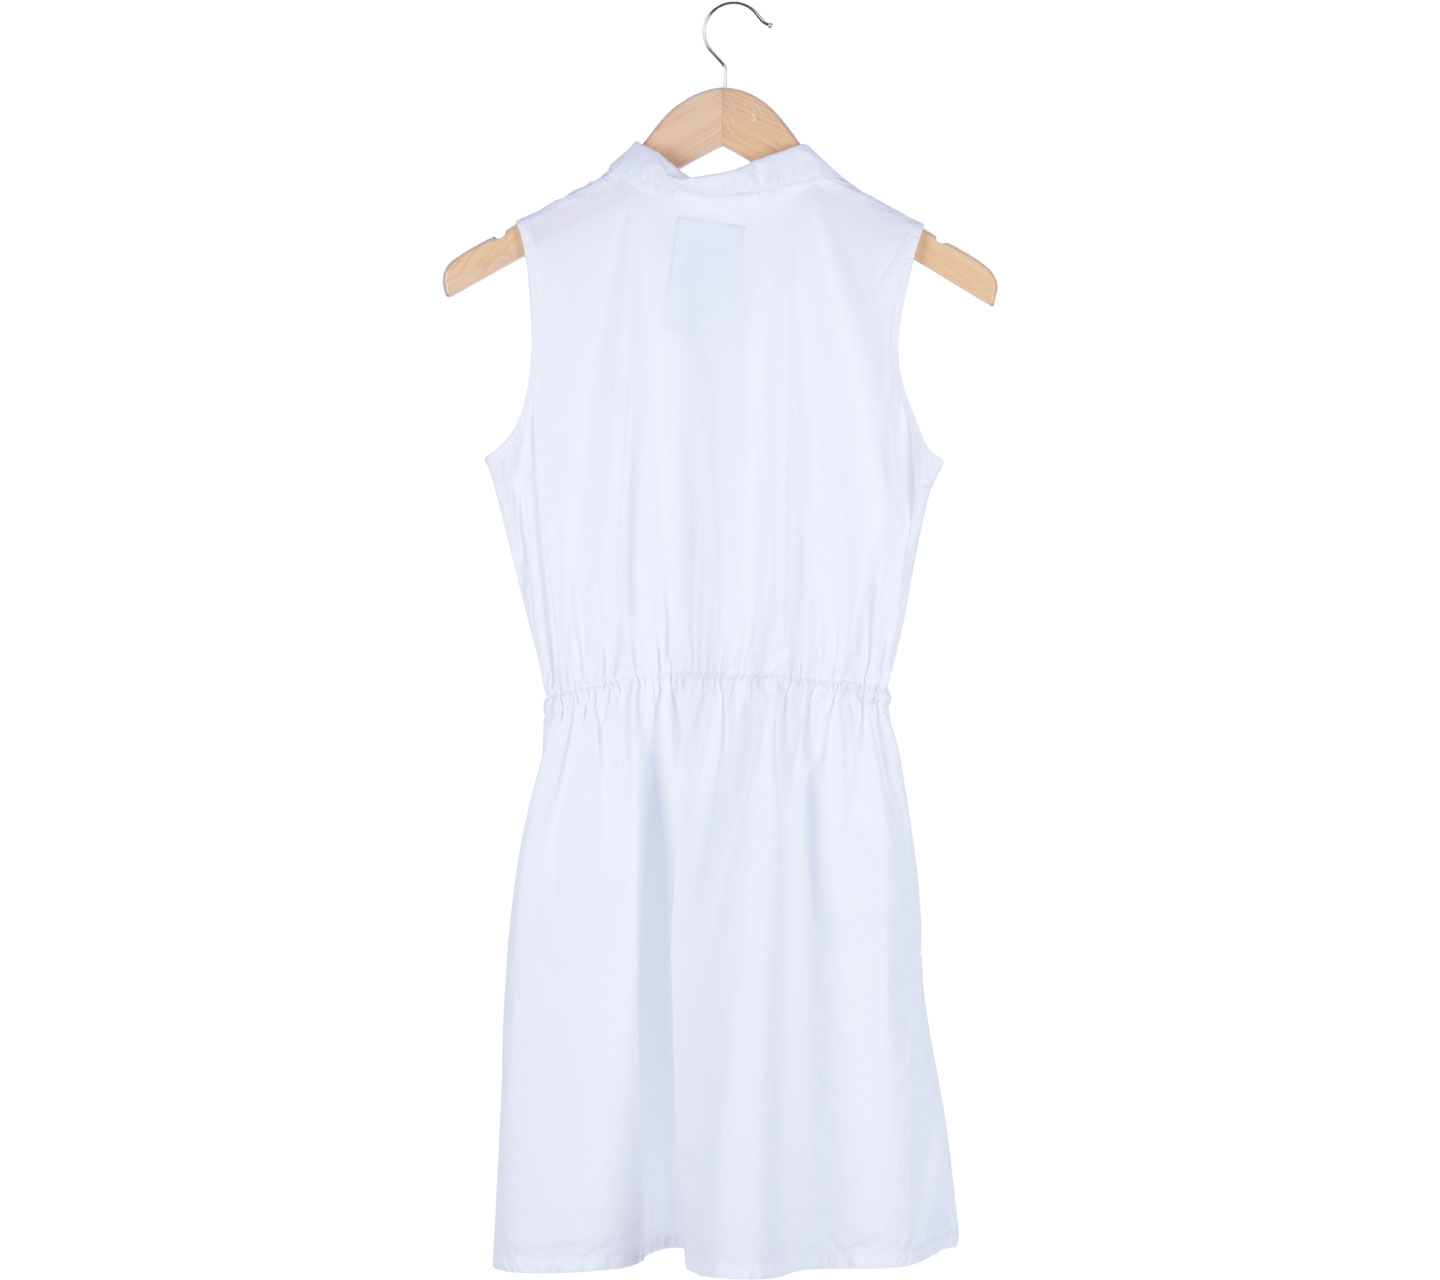 Cotton Ink White Shirt Mini Dress